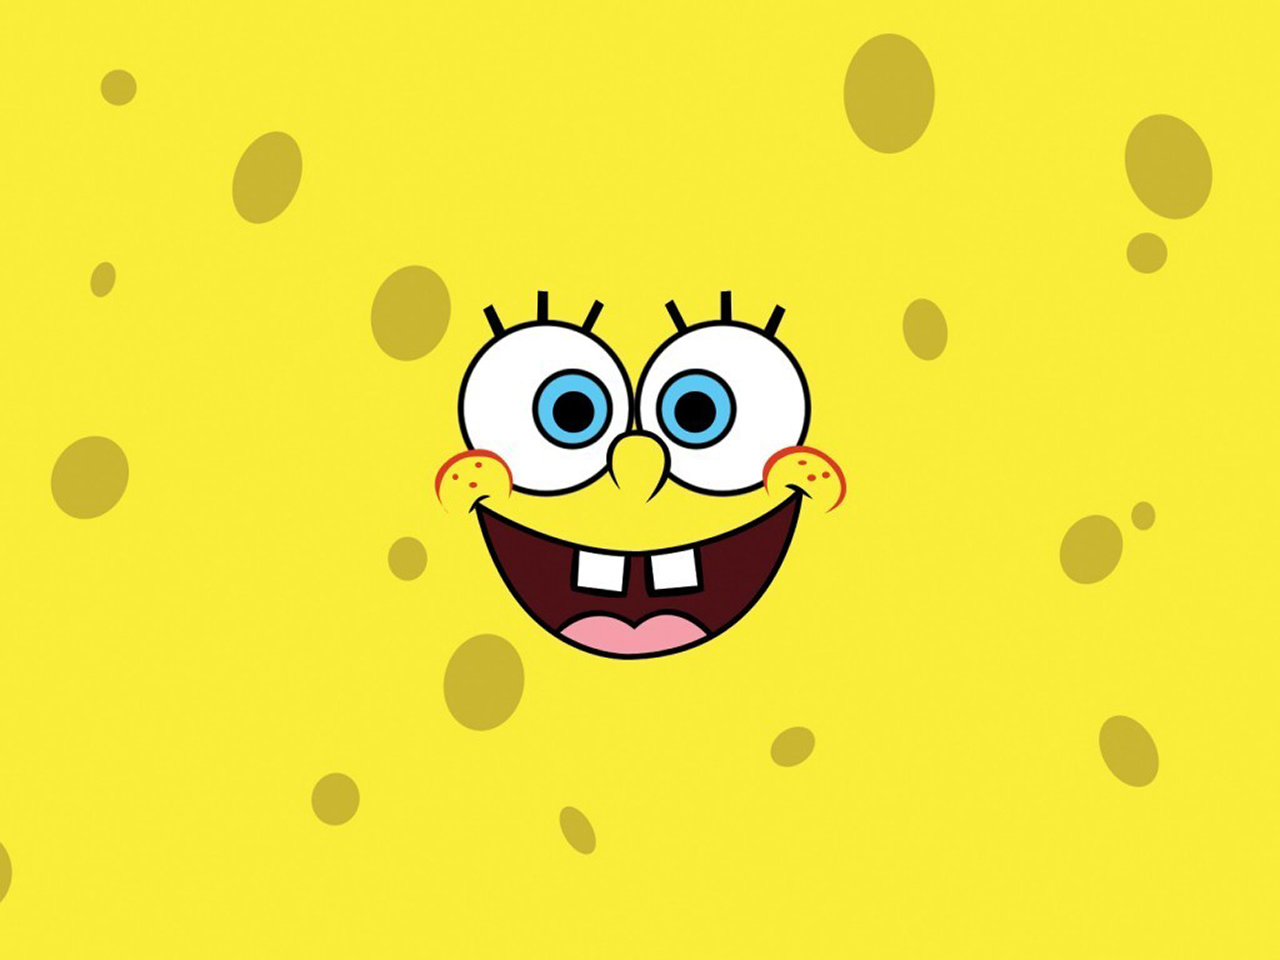 spongebob squarepants, tv show